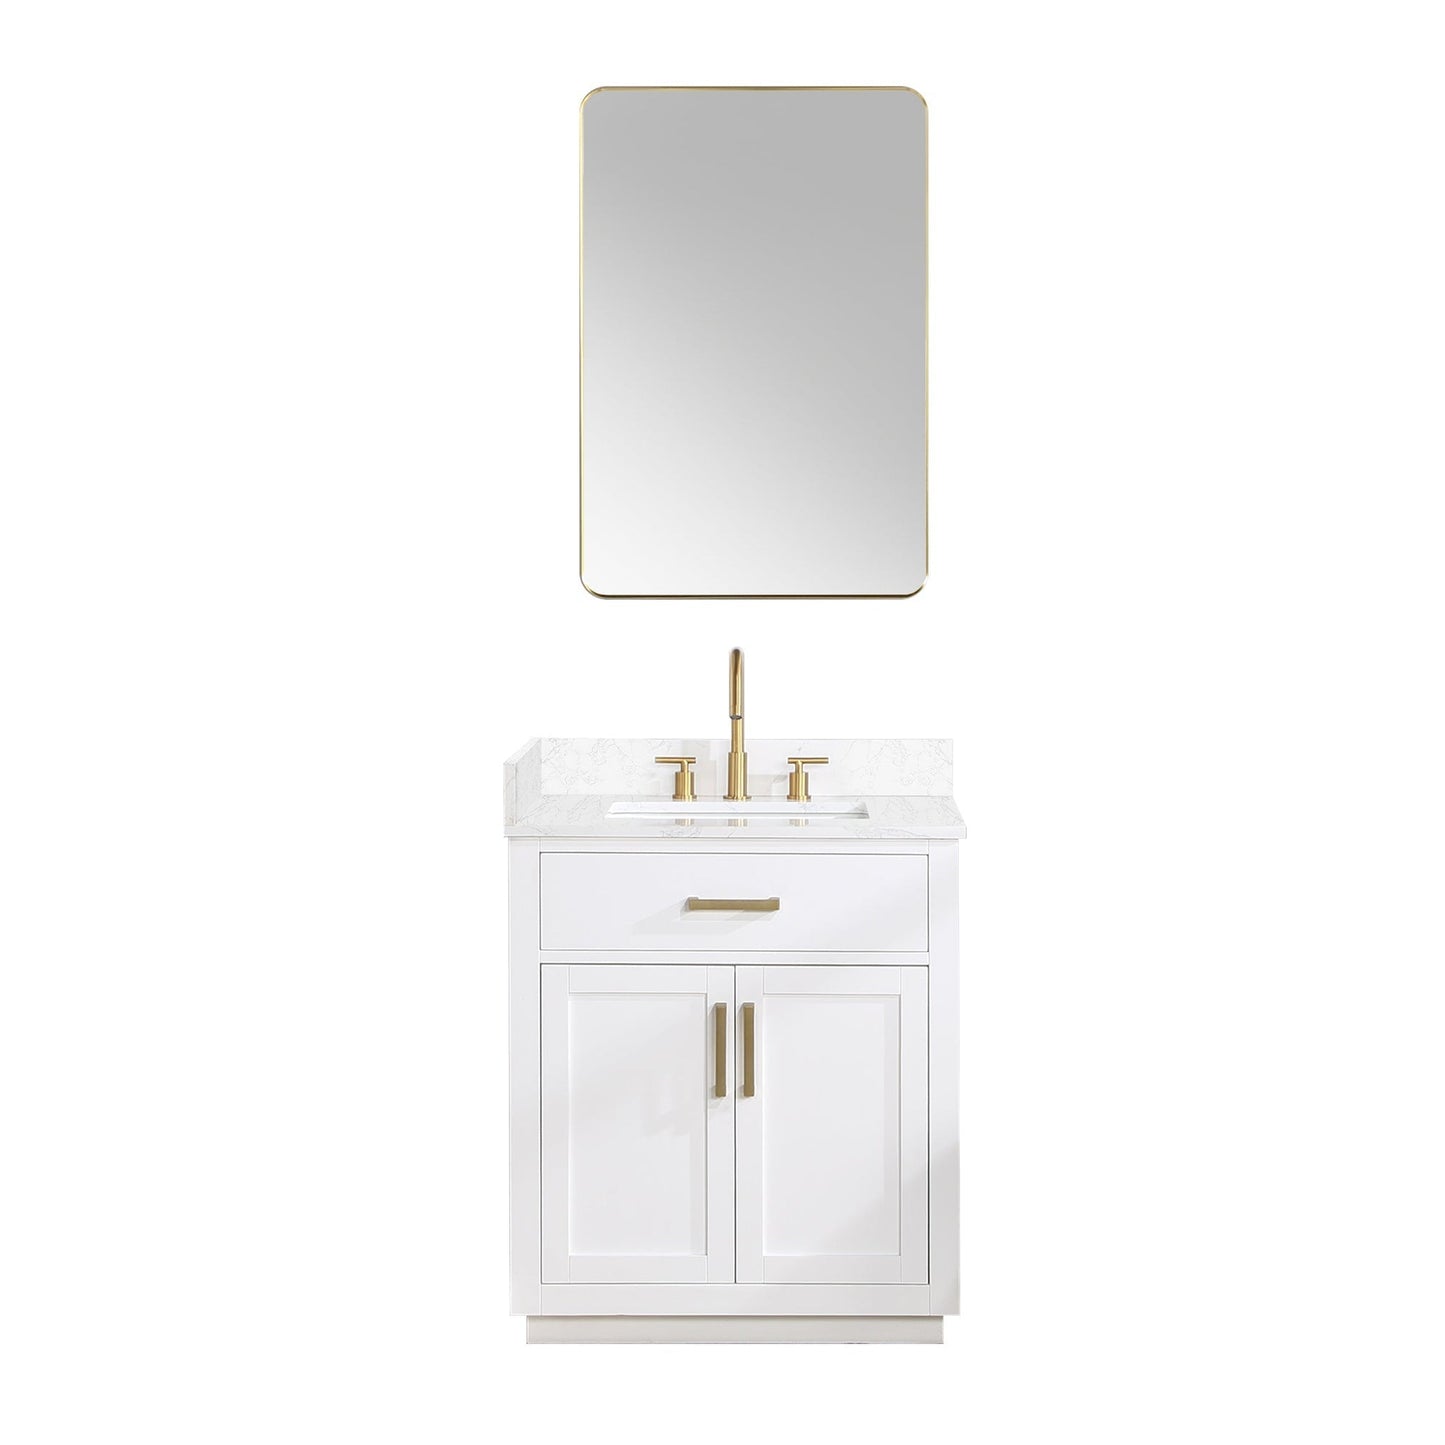 Altair Gavino 30" White Freestanding Single Bathroom Vanity Set With Mirror, Grain White Composite Stone Top, Single Rectangular Undermount Ceramic Sink, Overflow, Sidesplash, and Backsplash